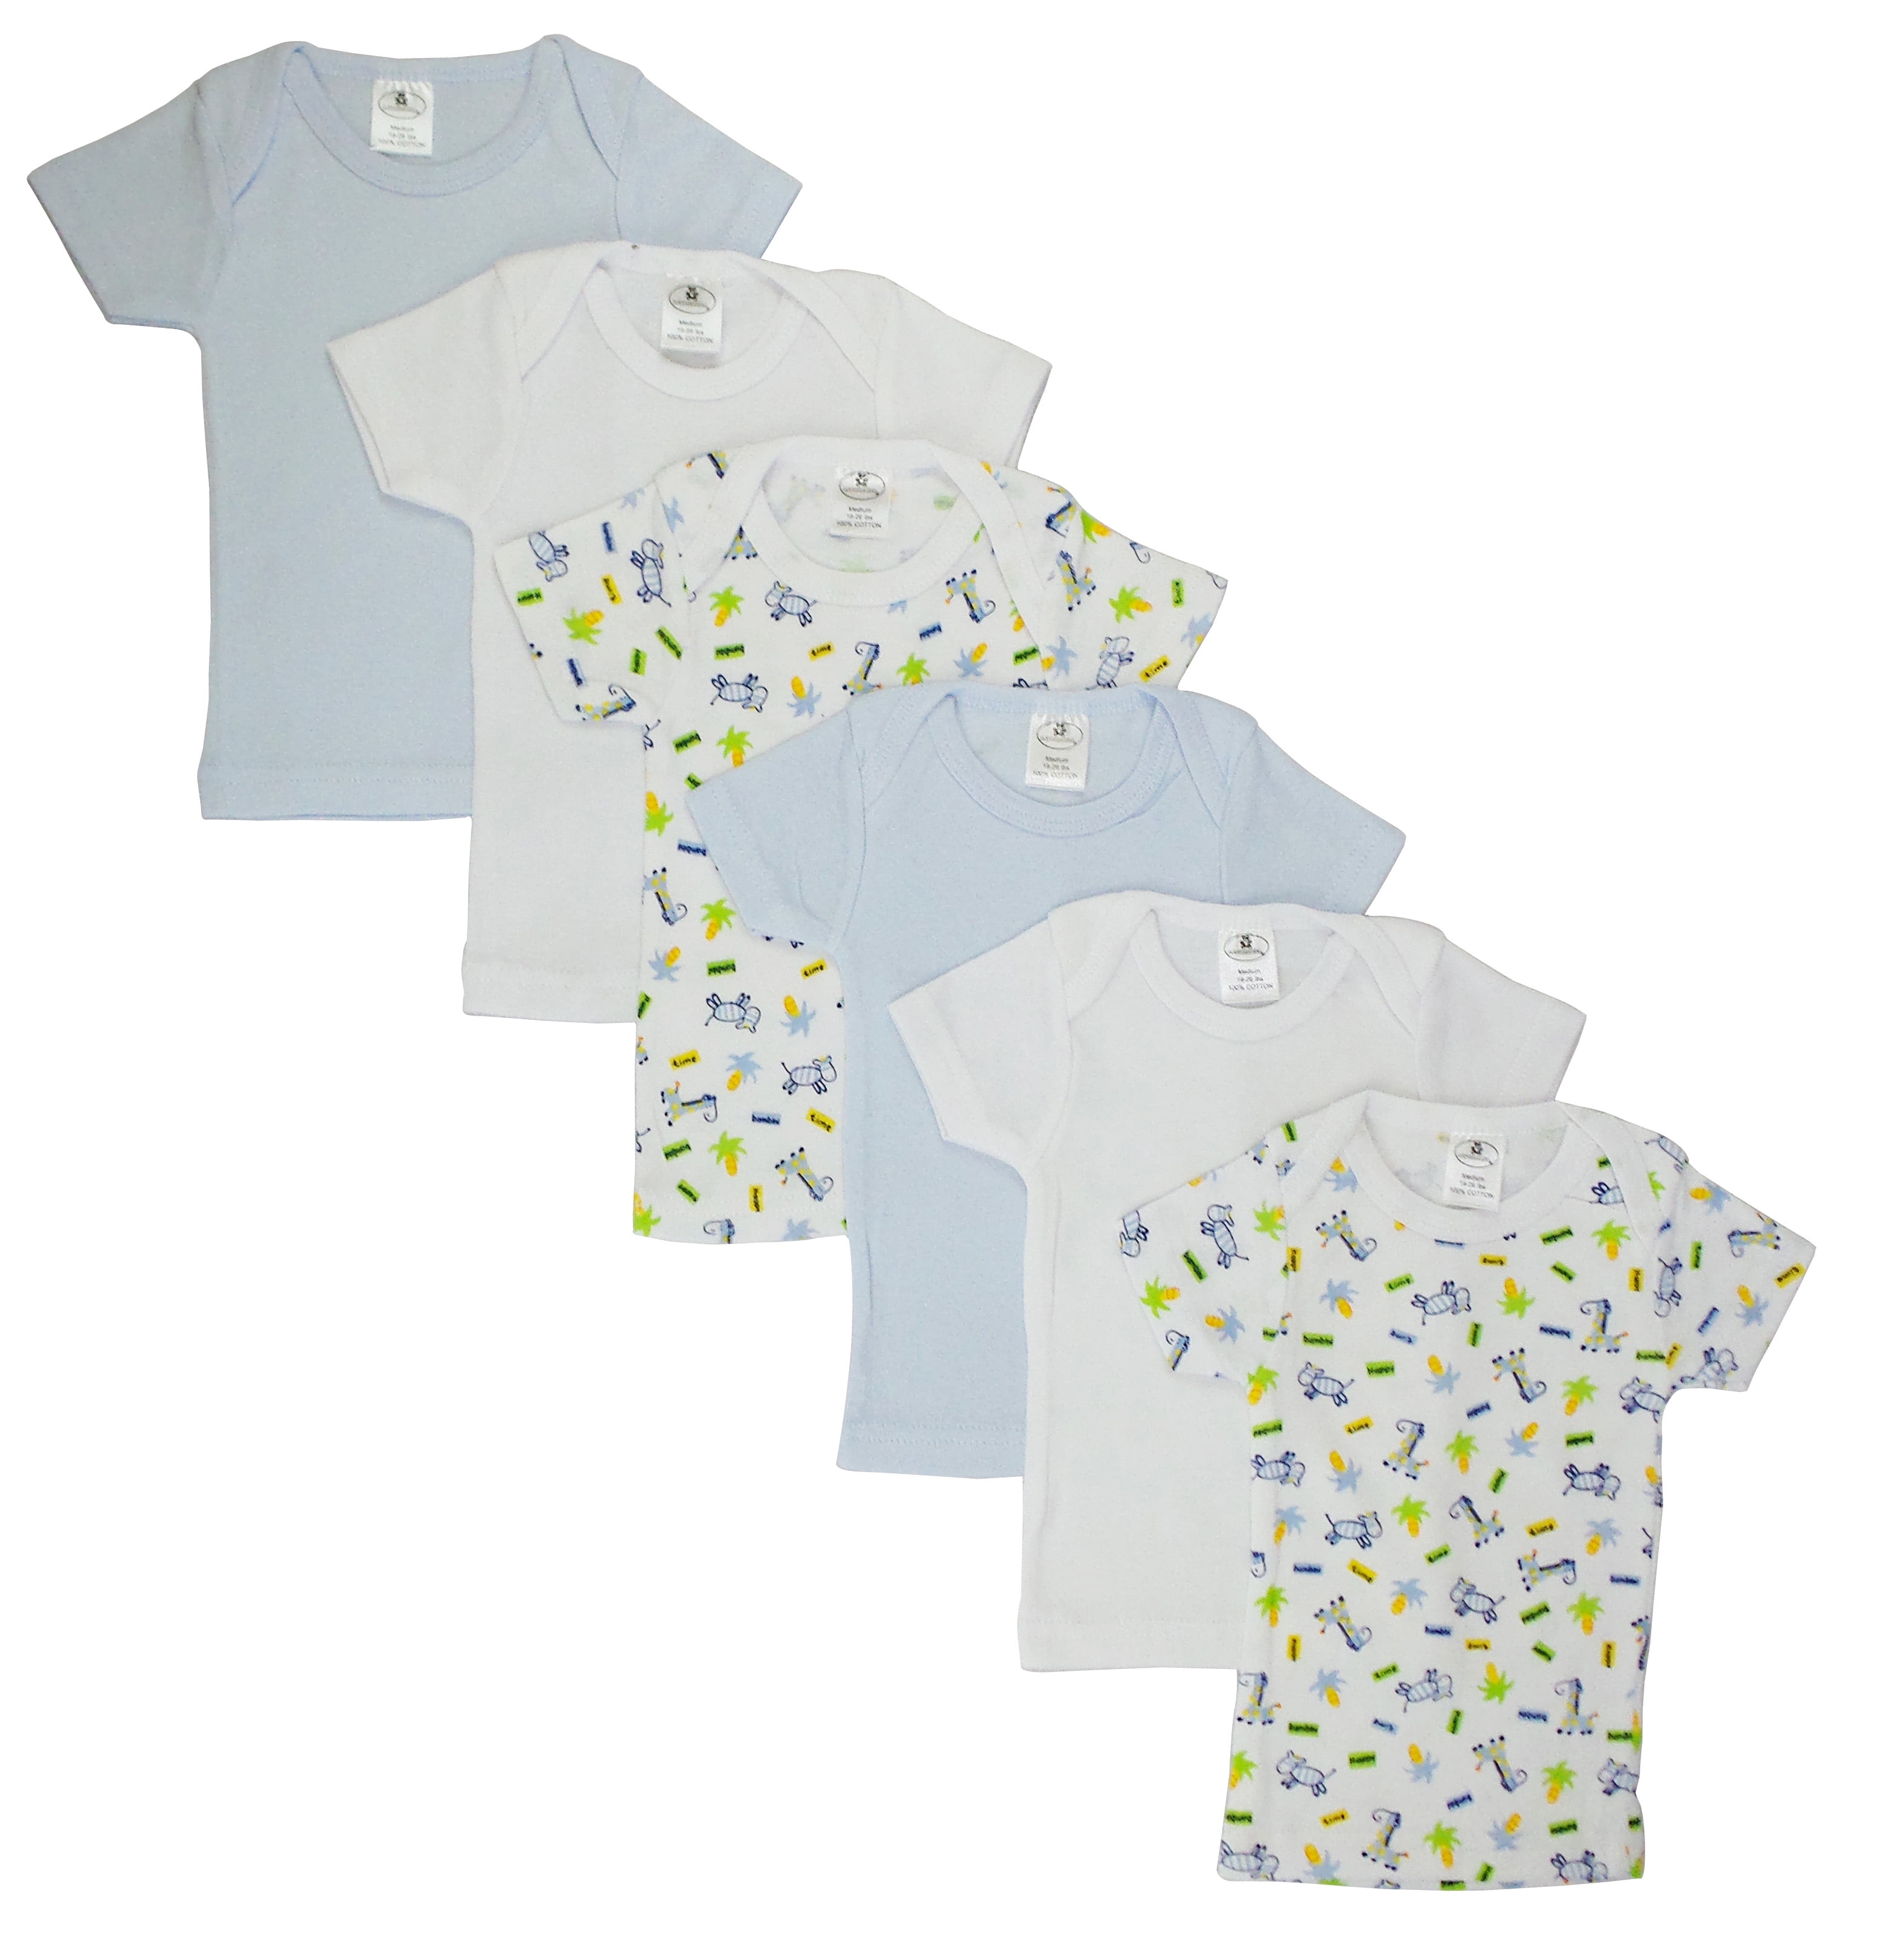 Cs-058nb-058nb Girls Pastel Variety Short Sleeve Lap T-shirts, Blue & White - Newborn